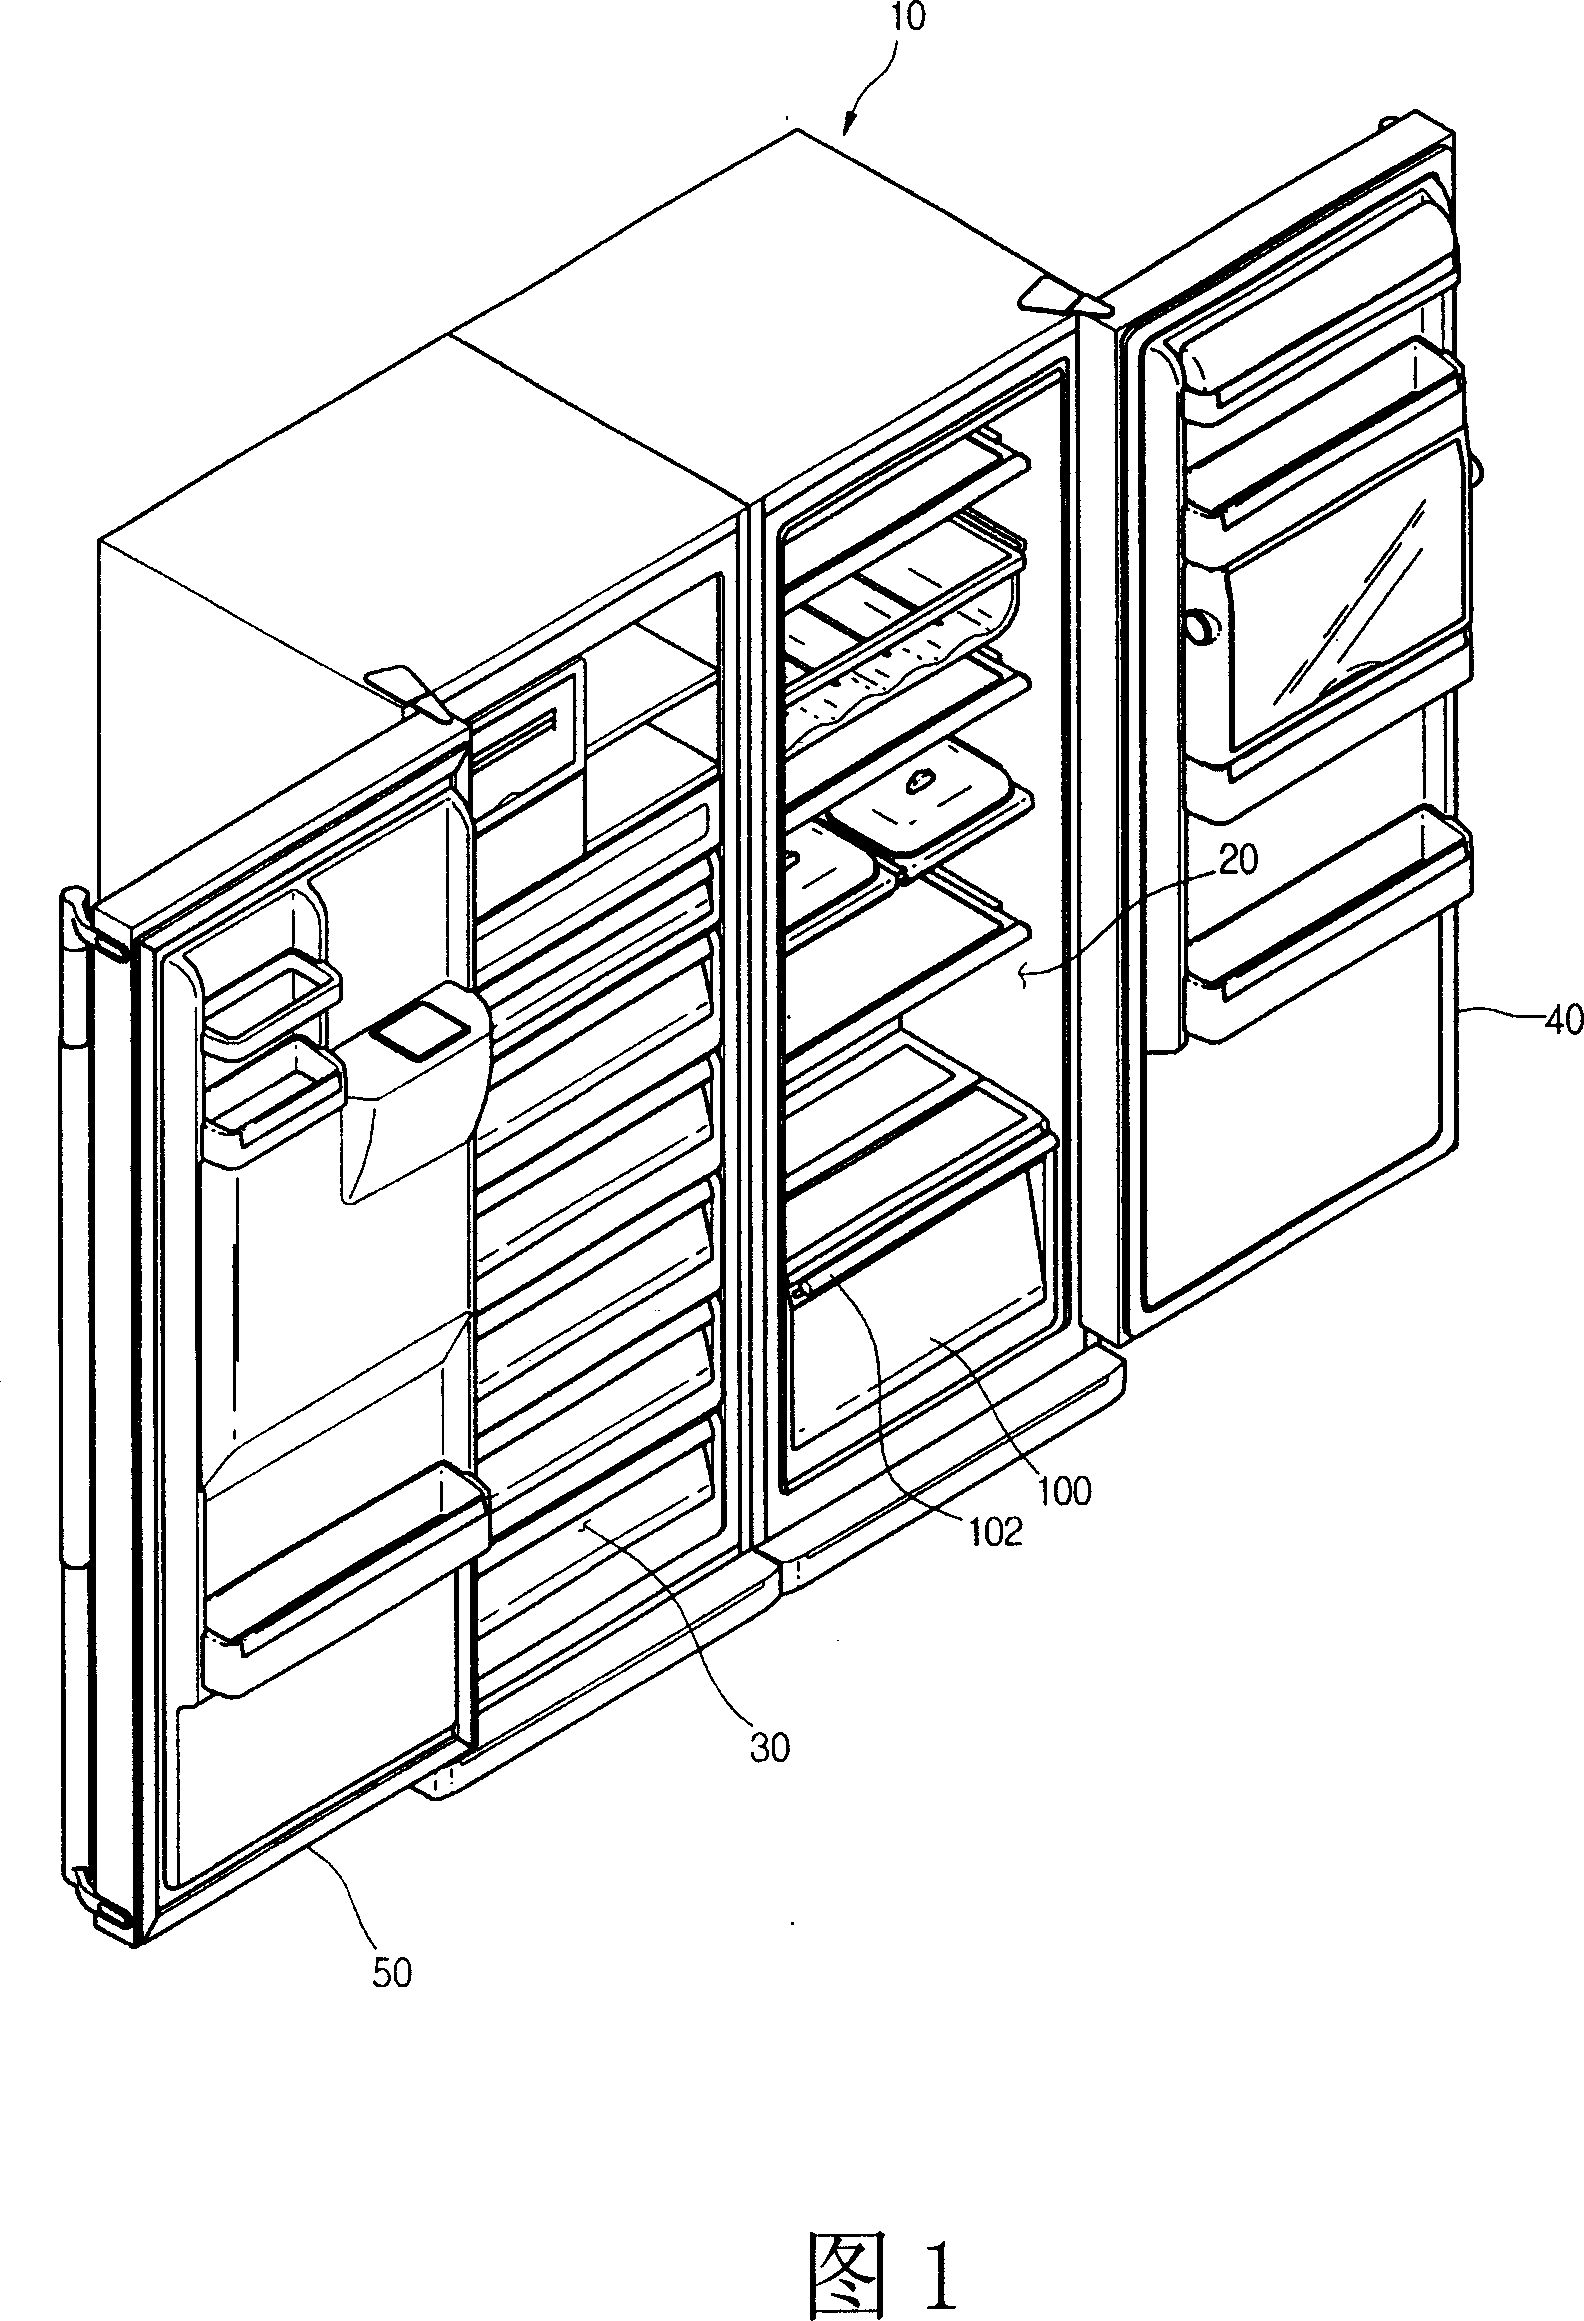 Defrosting device for refrigerator